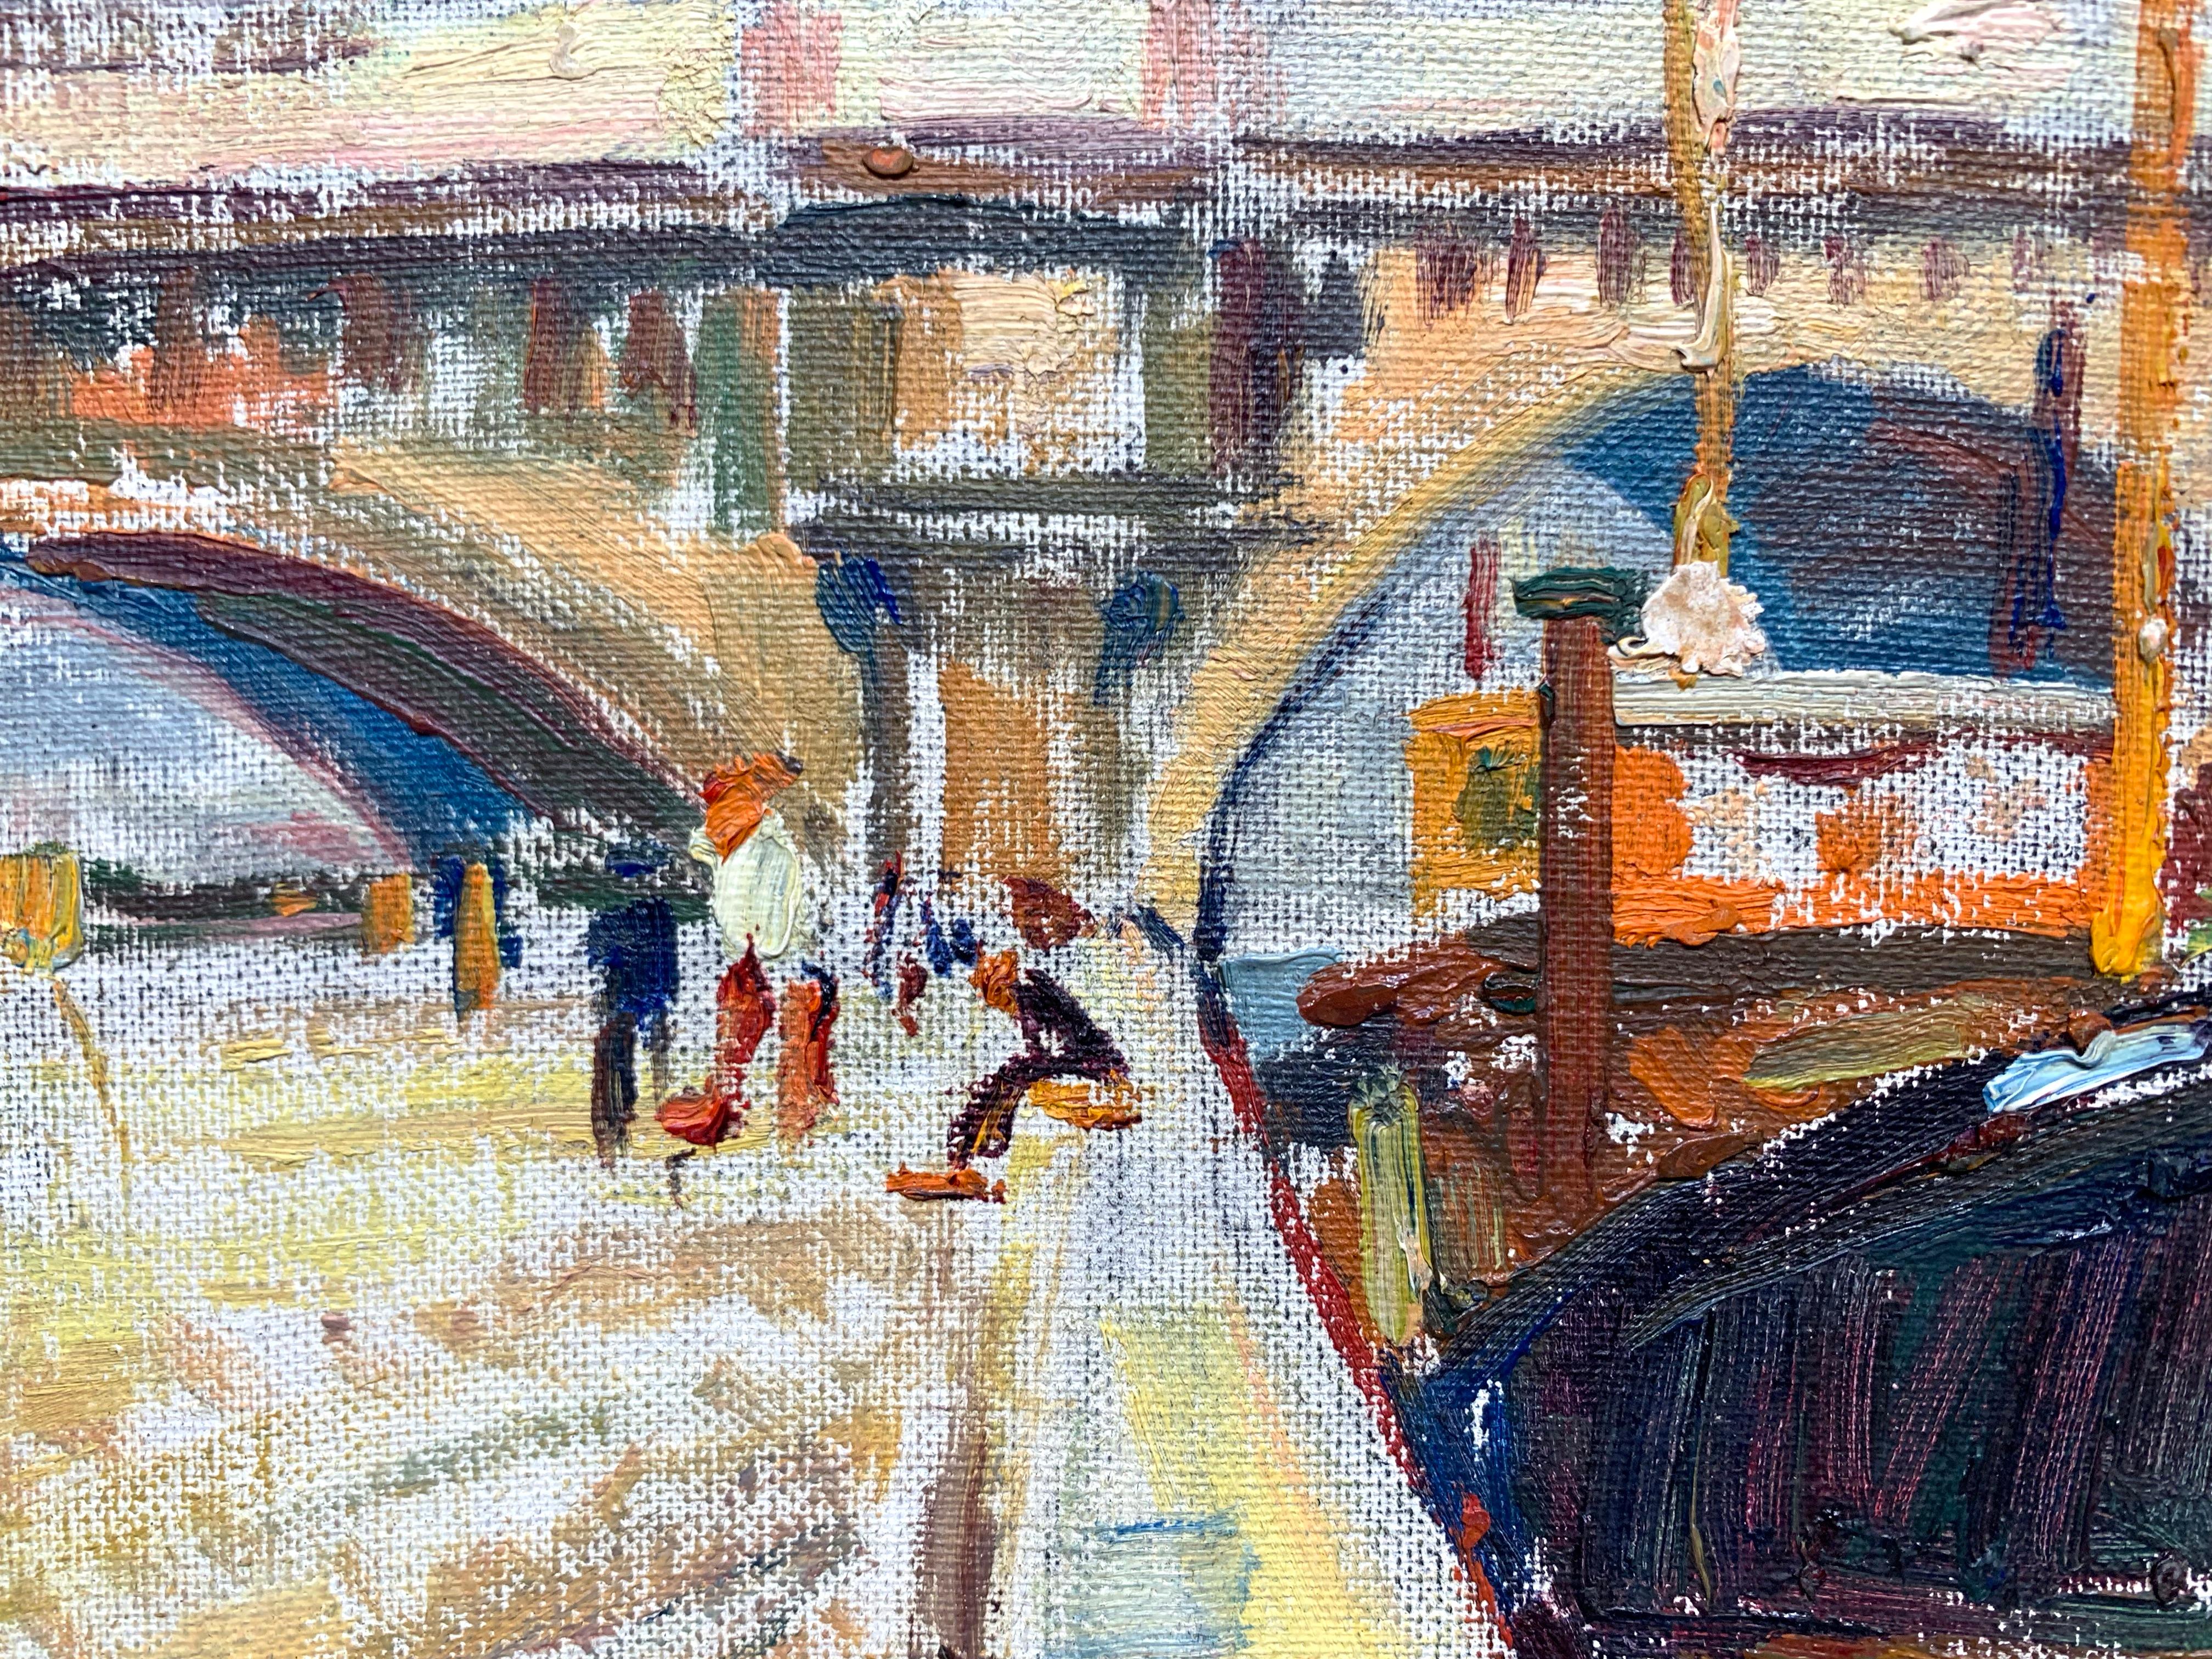 Pont Neuf Paris France (bridge cityscape/ landscape double-sided painting) - Painting by Mieczyslaw Lurczynski